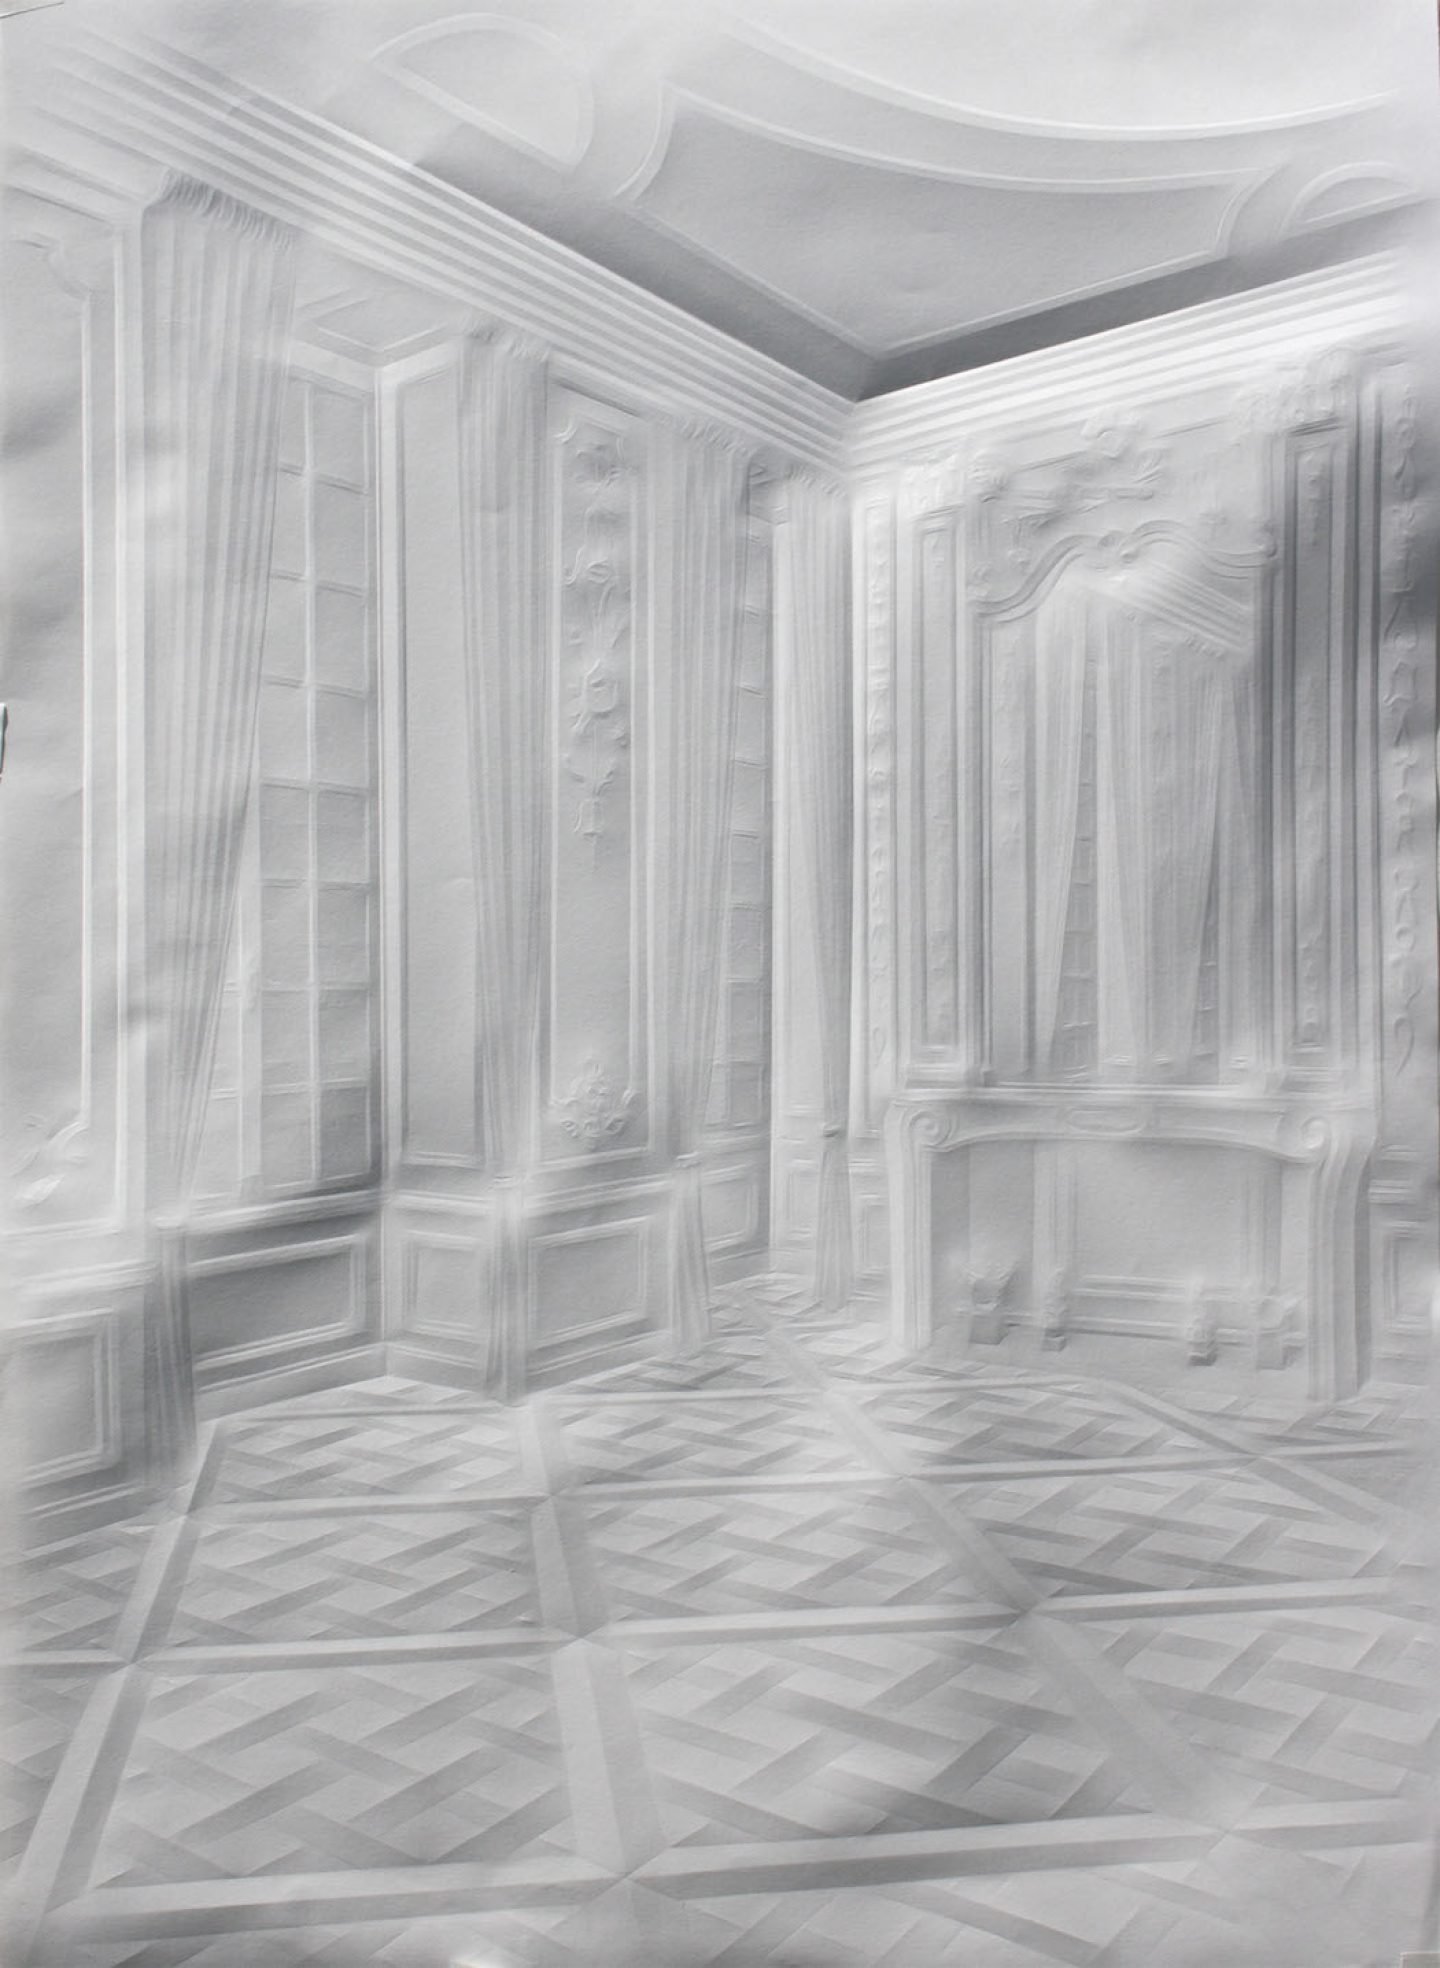 simonschubert(hallway with curtains),2013,70x50